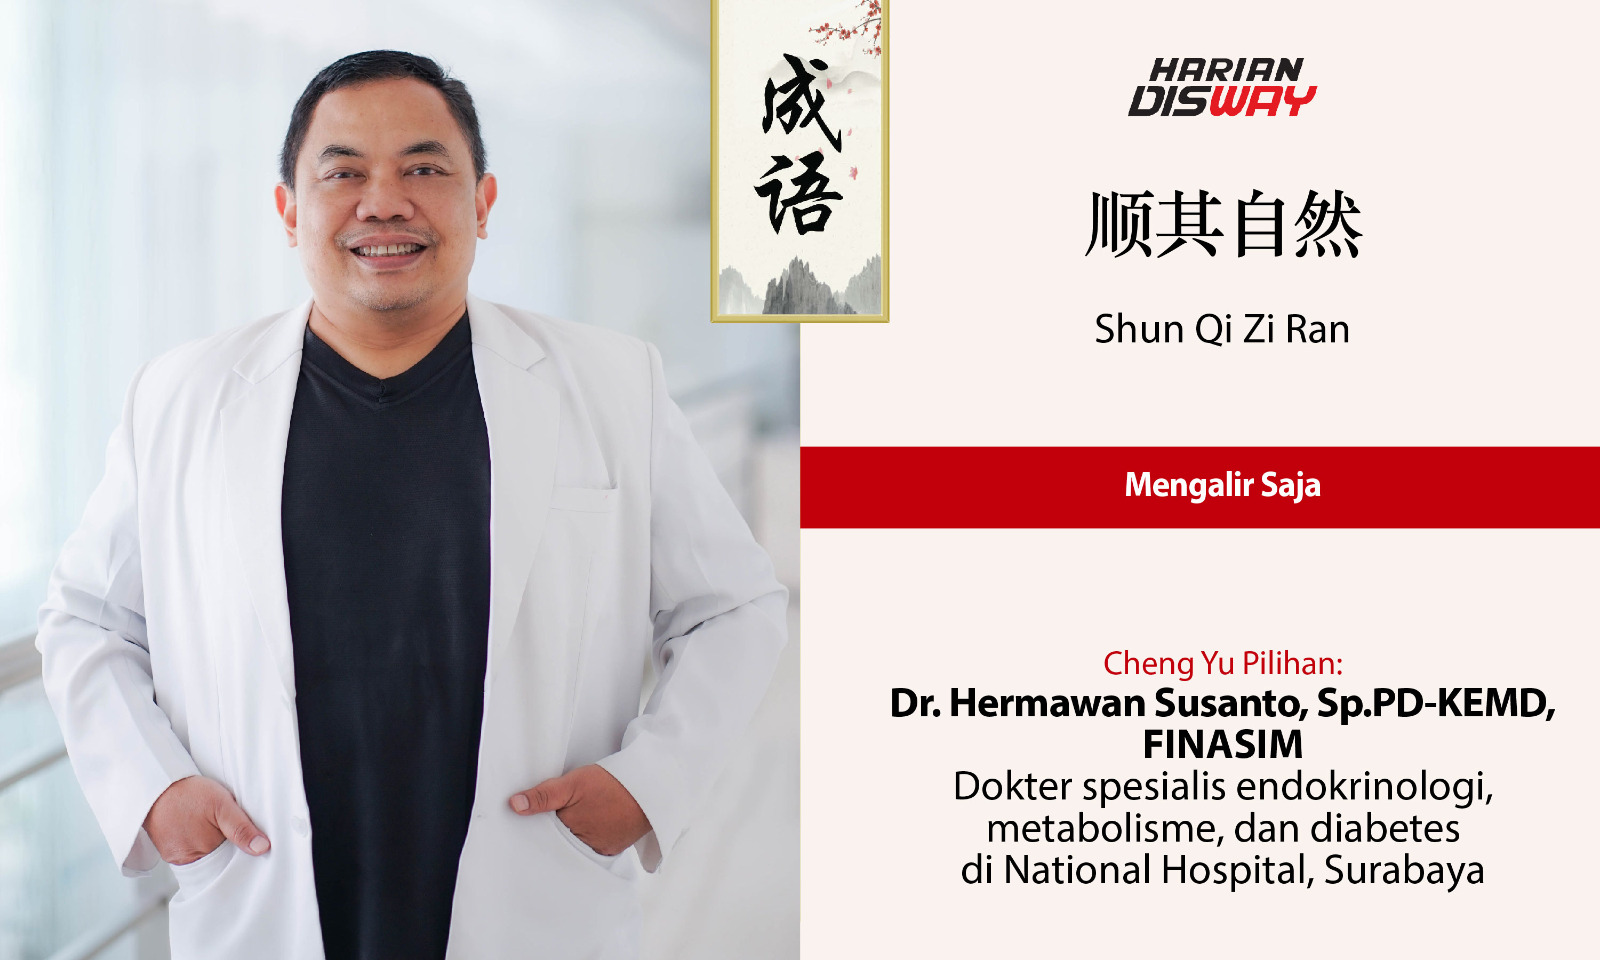  Cheng Yu Pilihan Dr. Hermawan Susanto, Sp.PD-KEMD, FINASIM, dokter spesialis endokrinologi, metabolisme, dan diabetes di National Hospital, Surabaya: